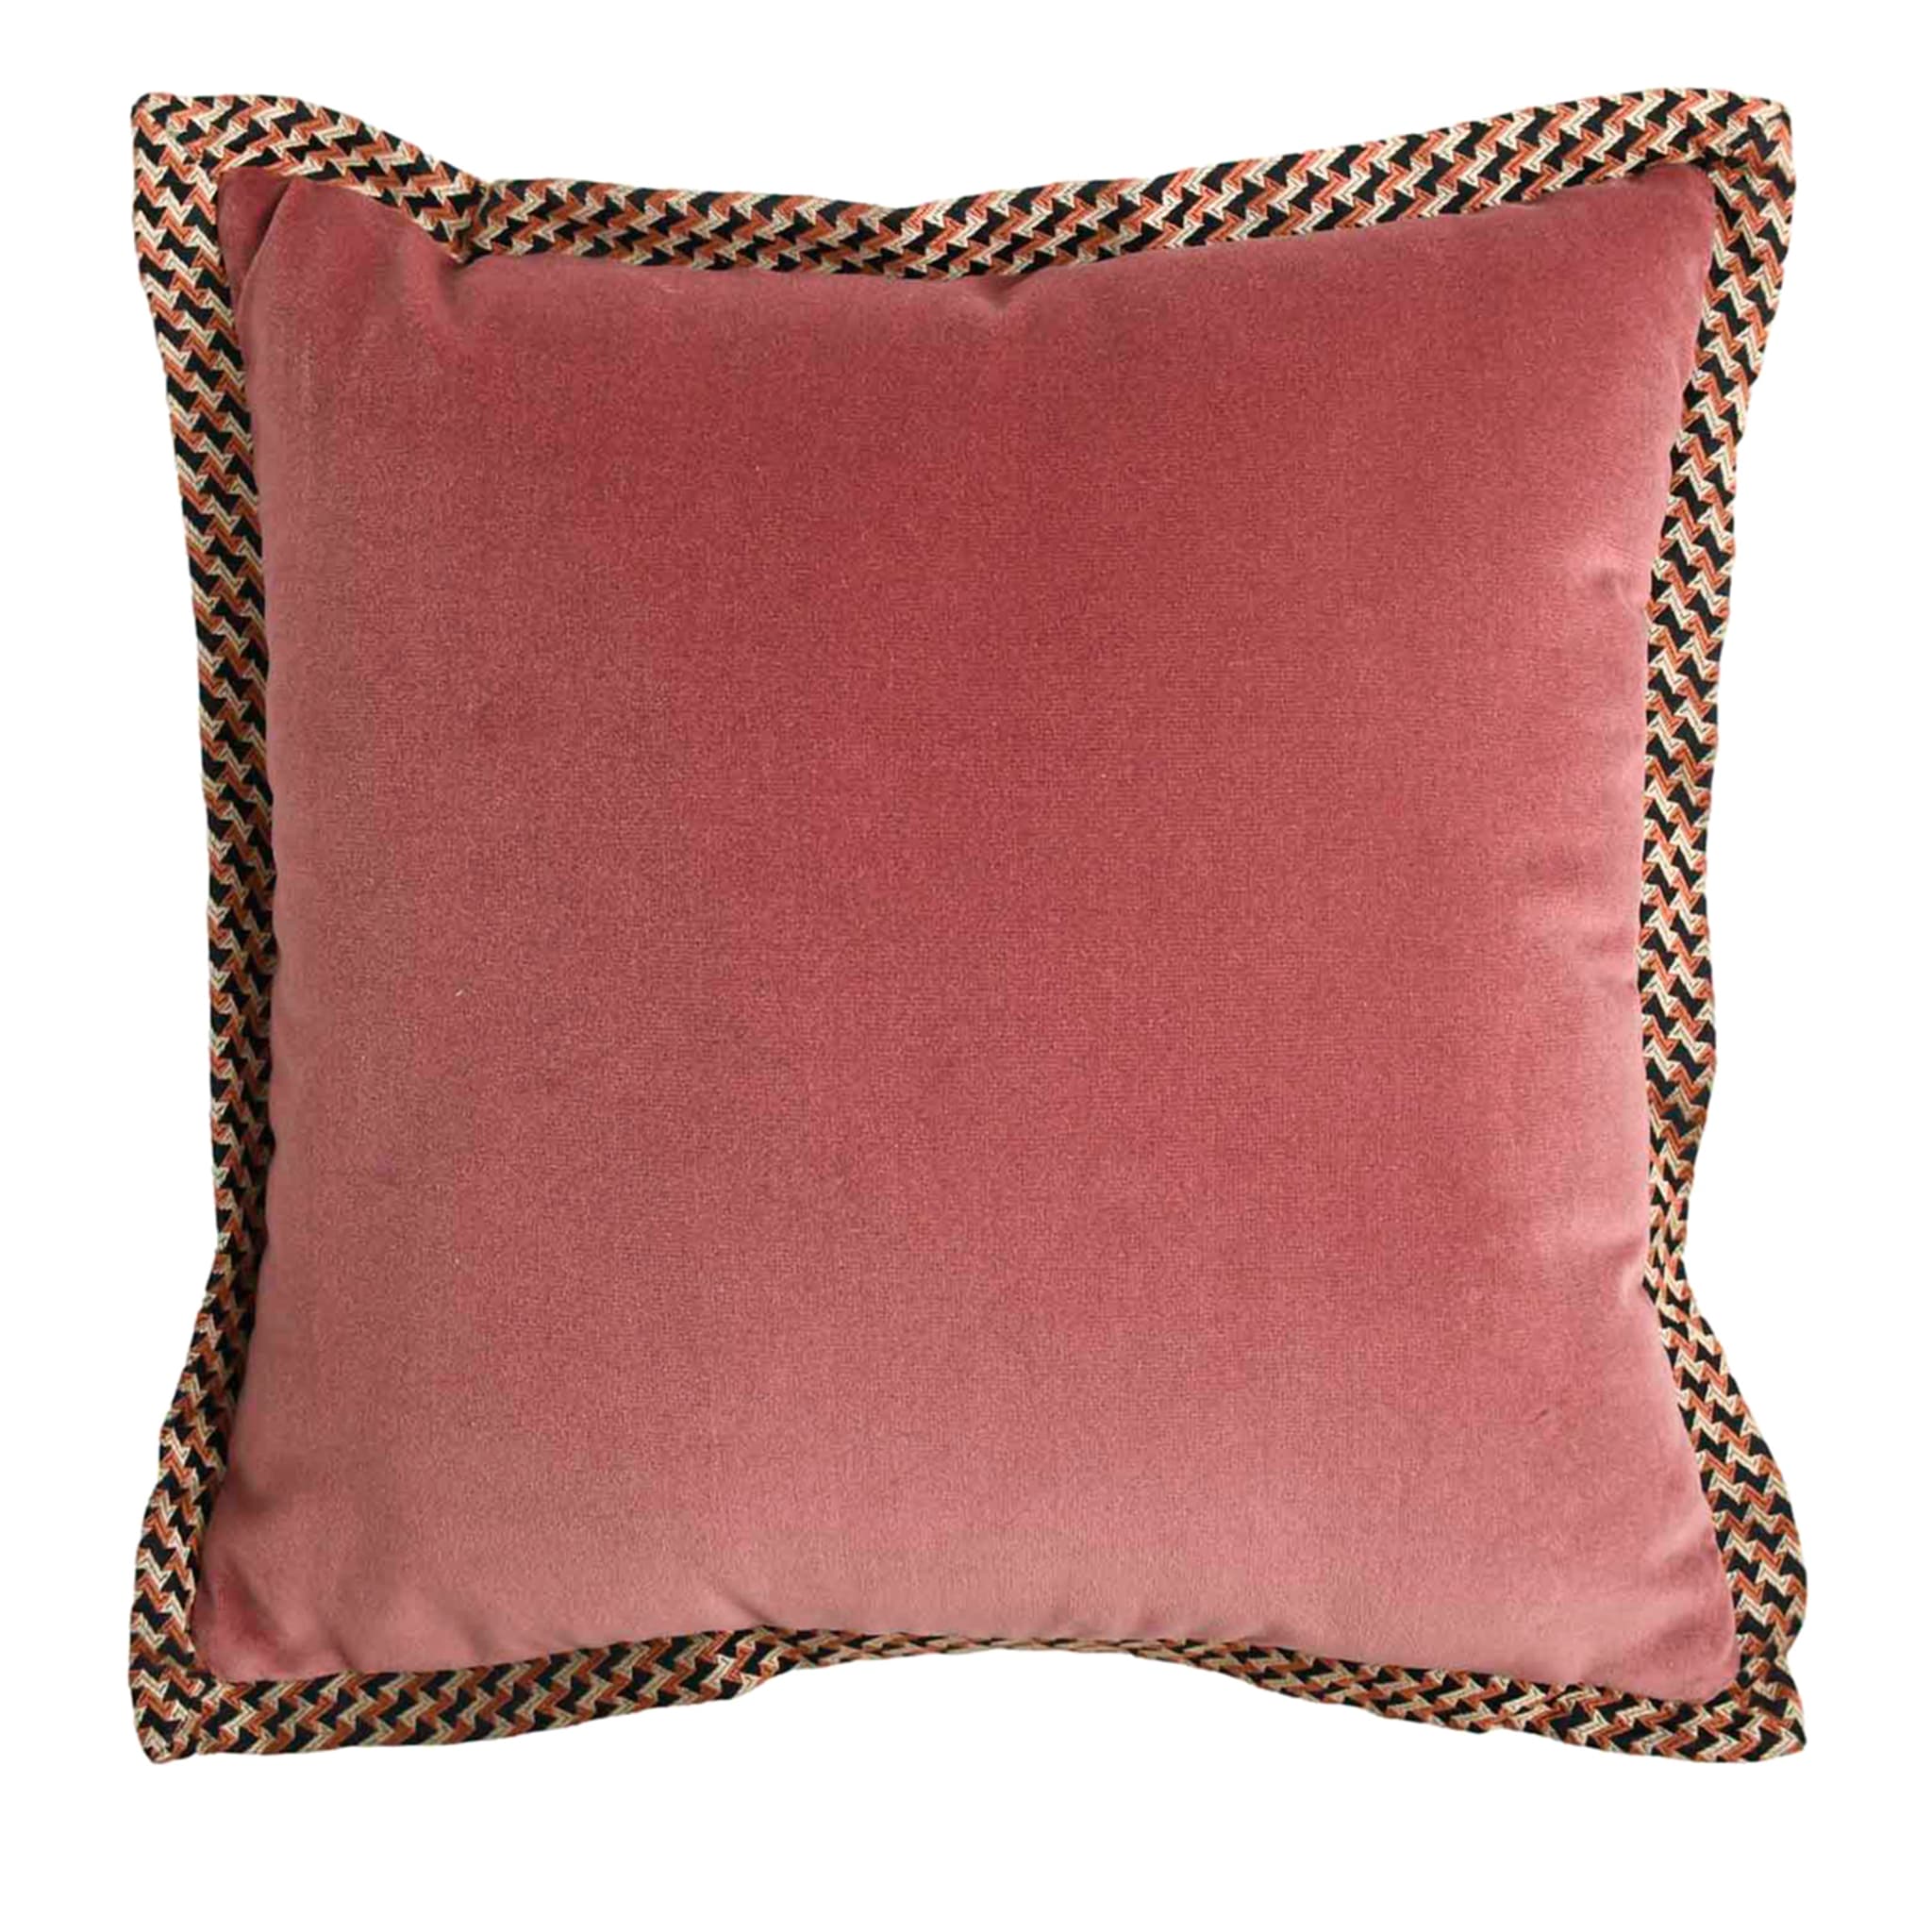 Carrè Flat Plain/Patterned Pink Square Cushion - Main view